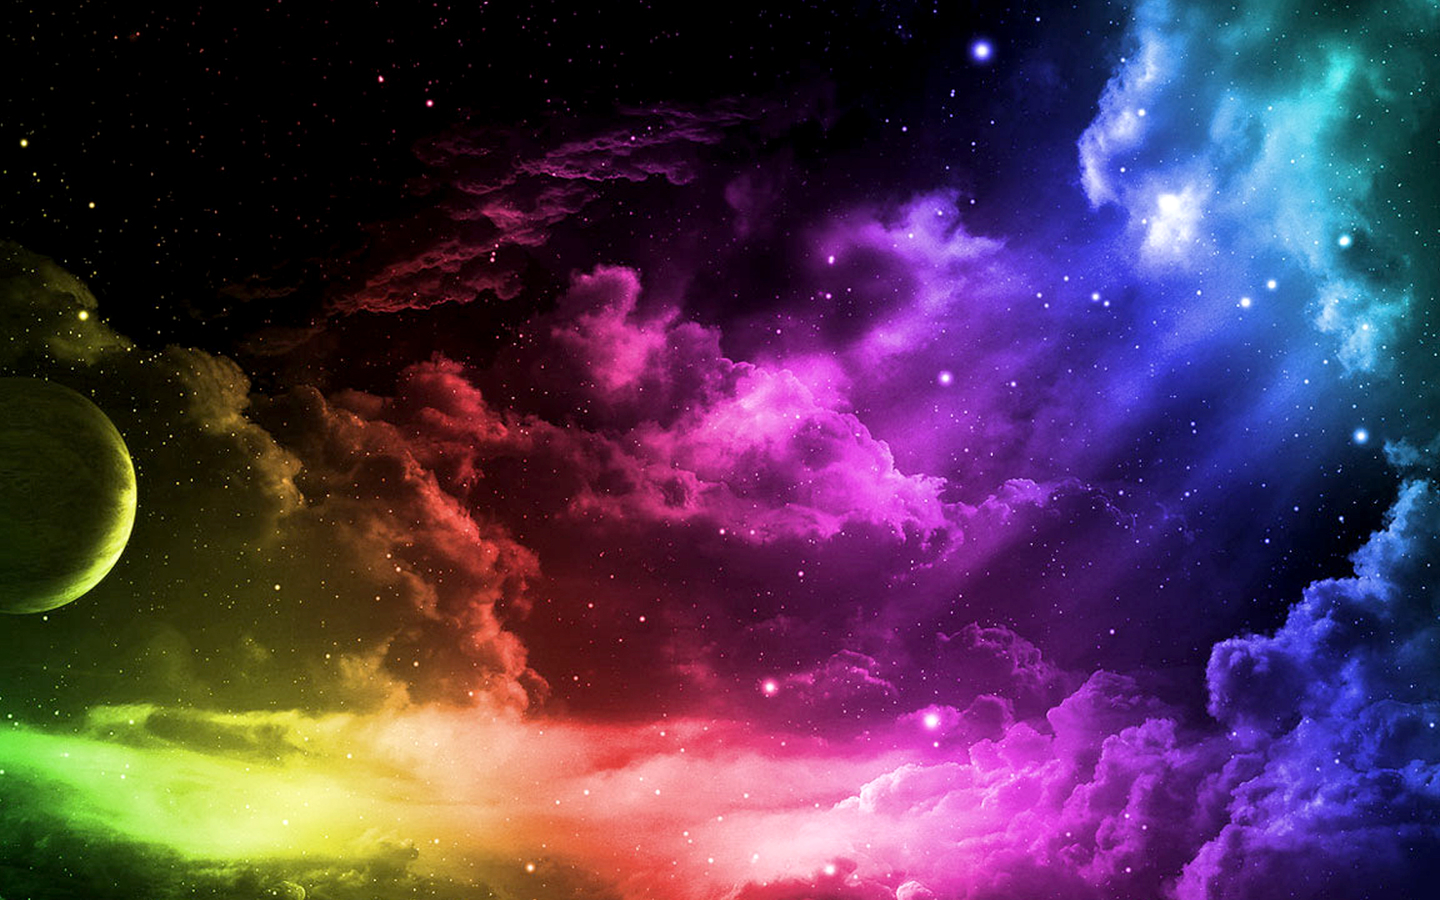 galaxy s4 wallpaper hd 1920x1080,sky,nature,outer space,nebula,purple